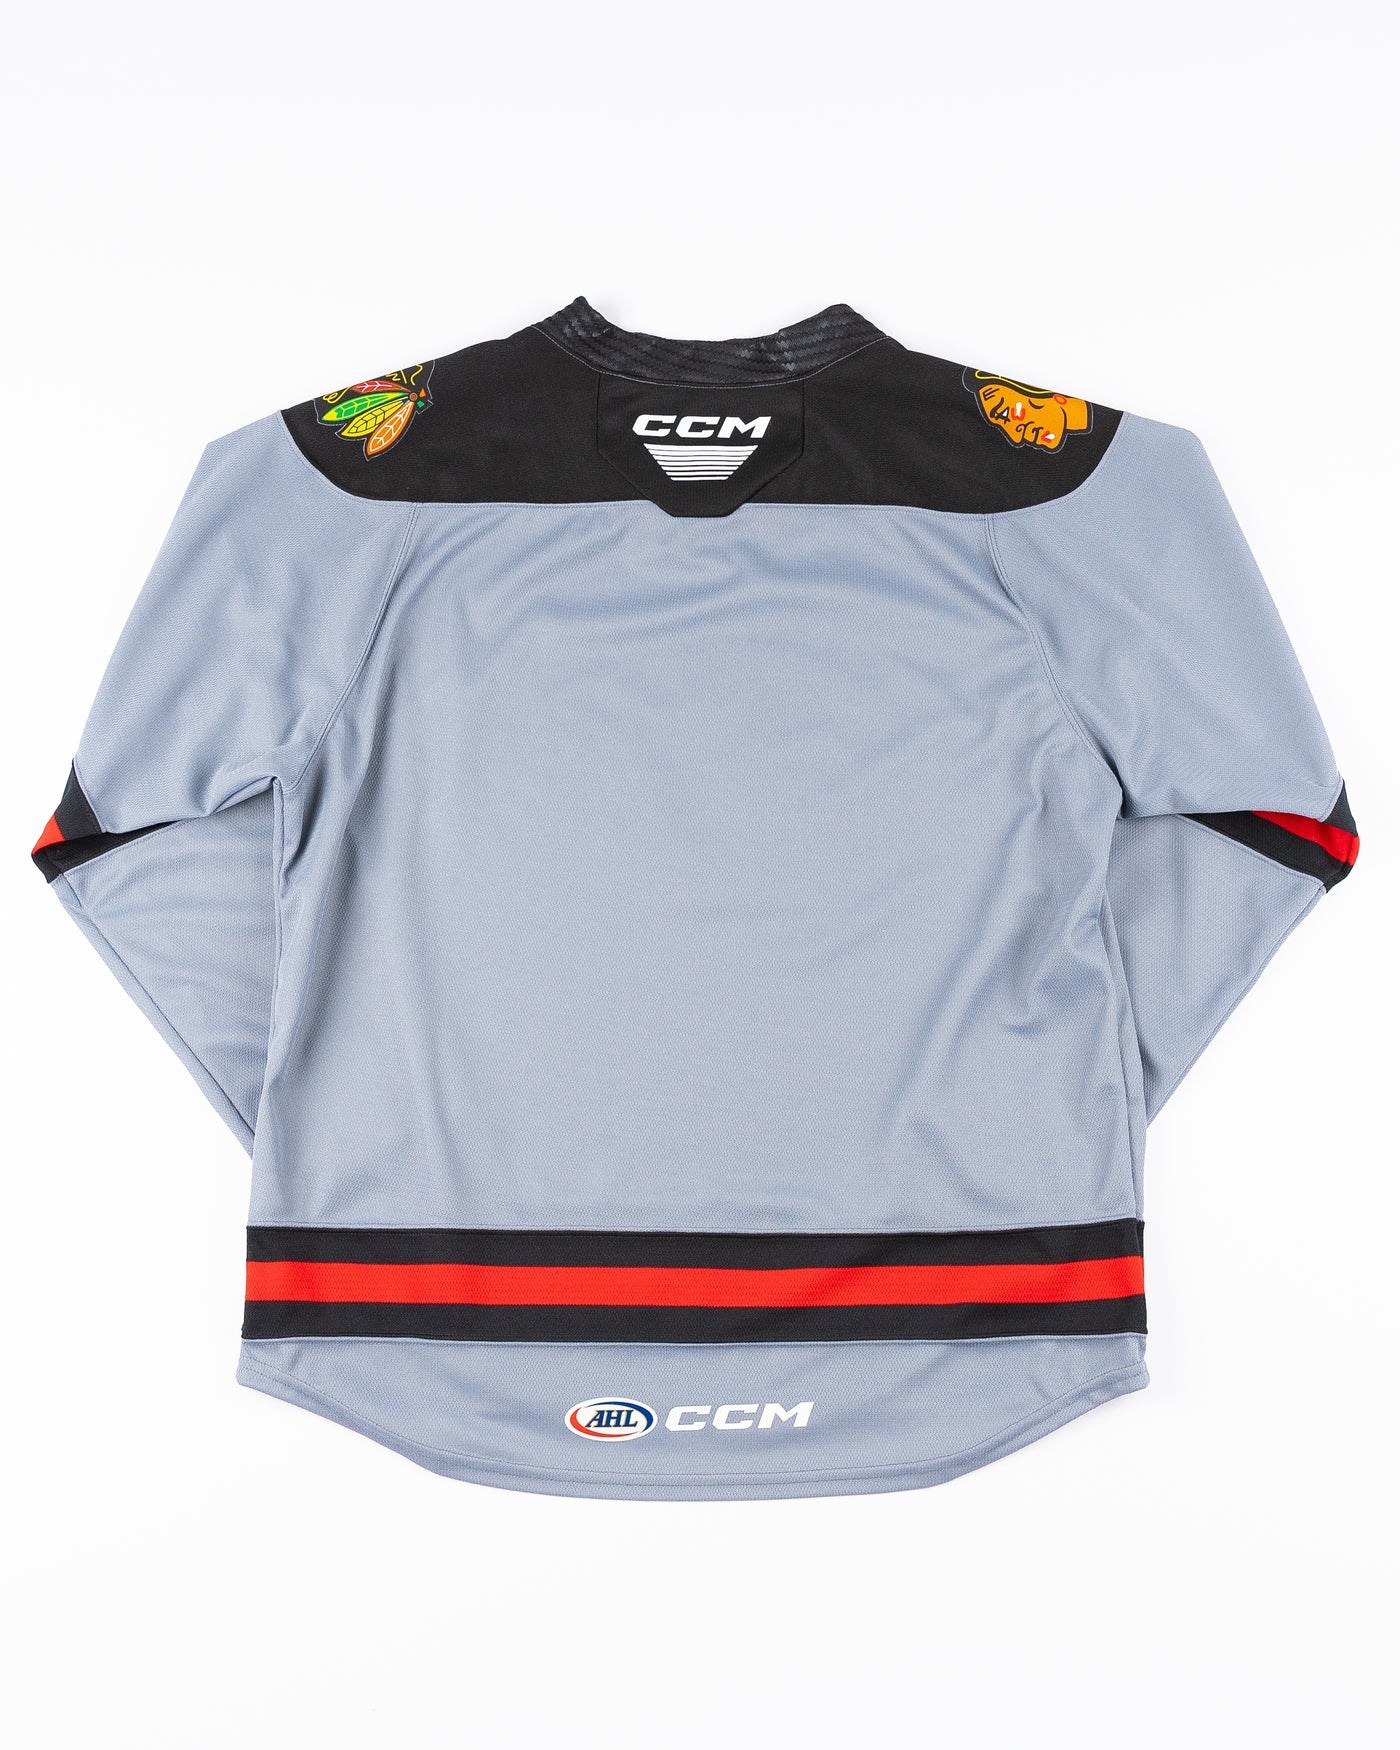 gray CCM Rockford IceHogs jersey - back lay flat